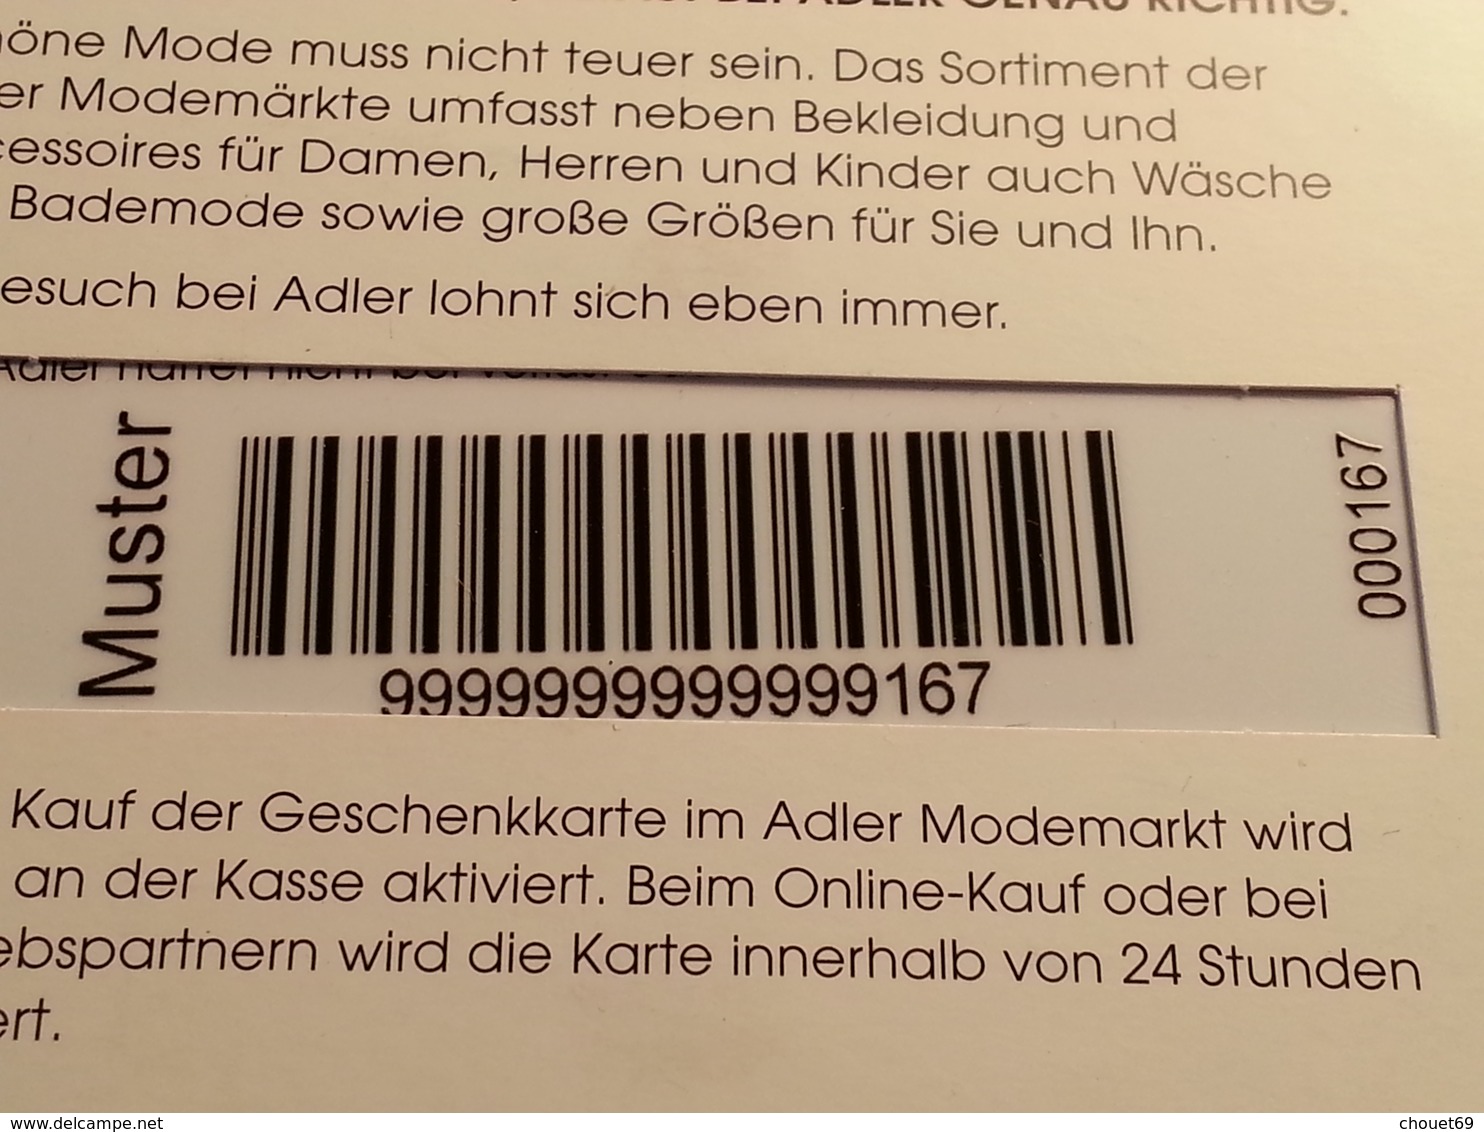 GERMANY - ADLER - MUSTER 25 Euros - DEMO TEST TRIAL CADEAU GIFT CARD (SACROC) - Gift Cards